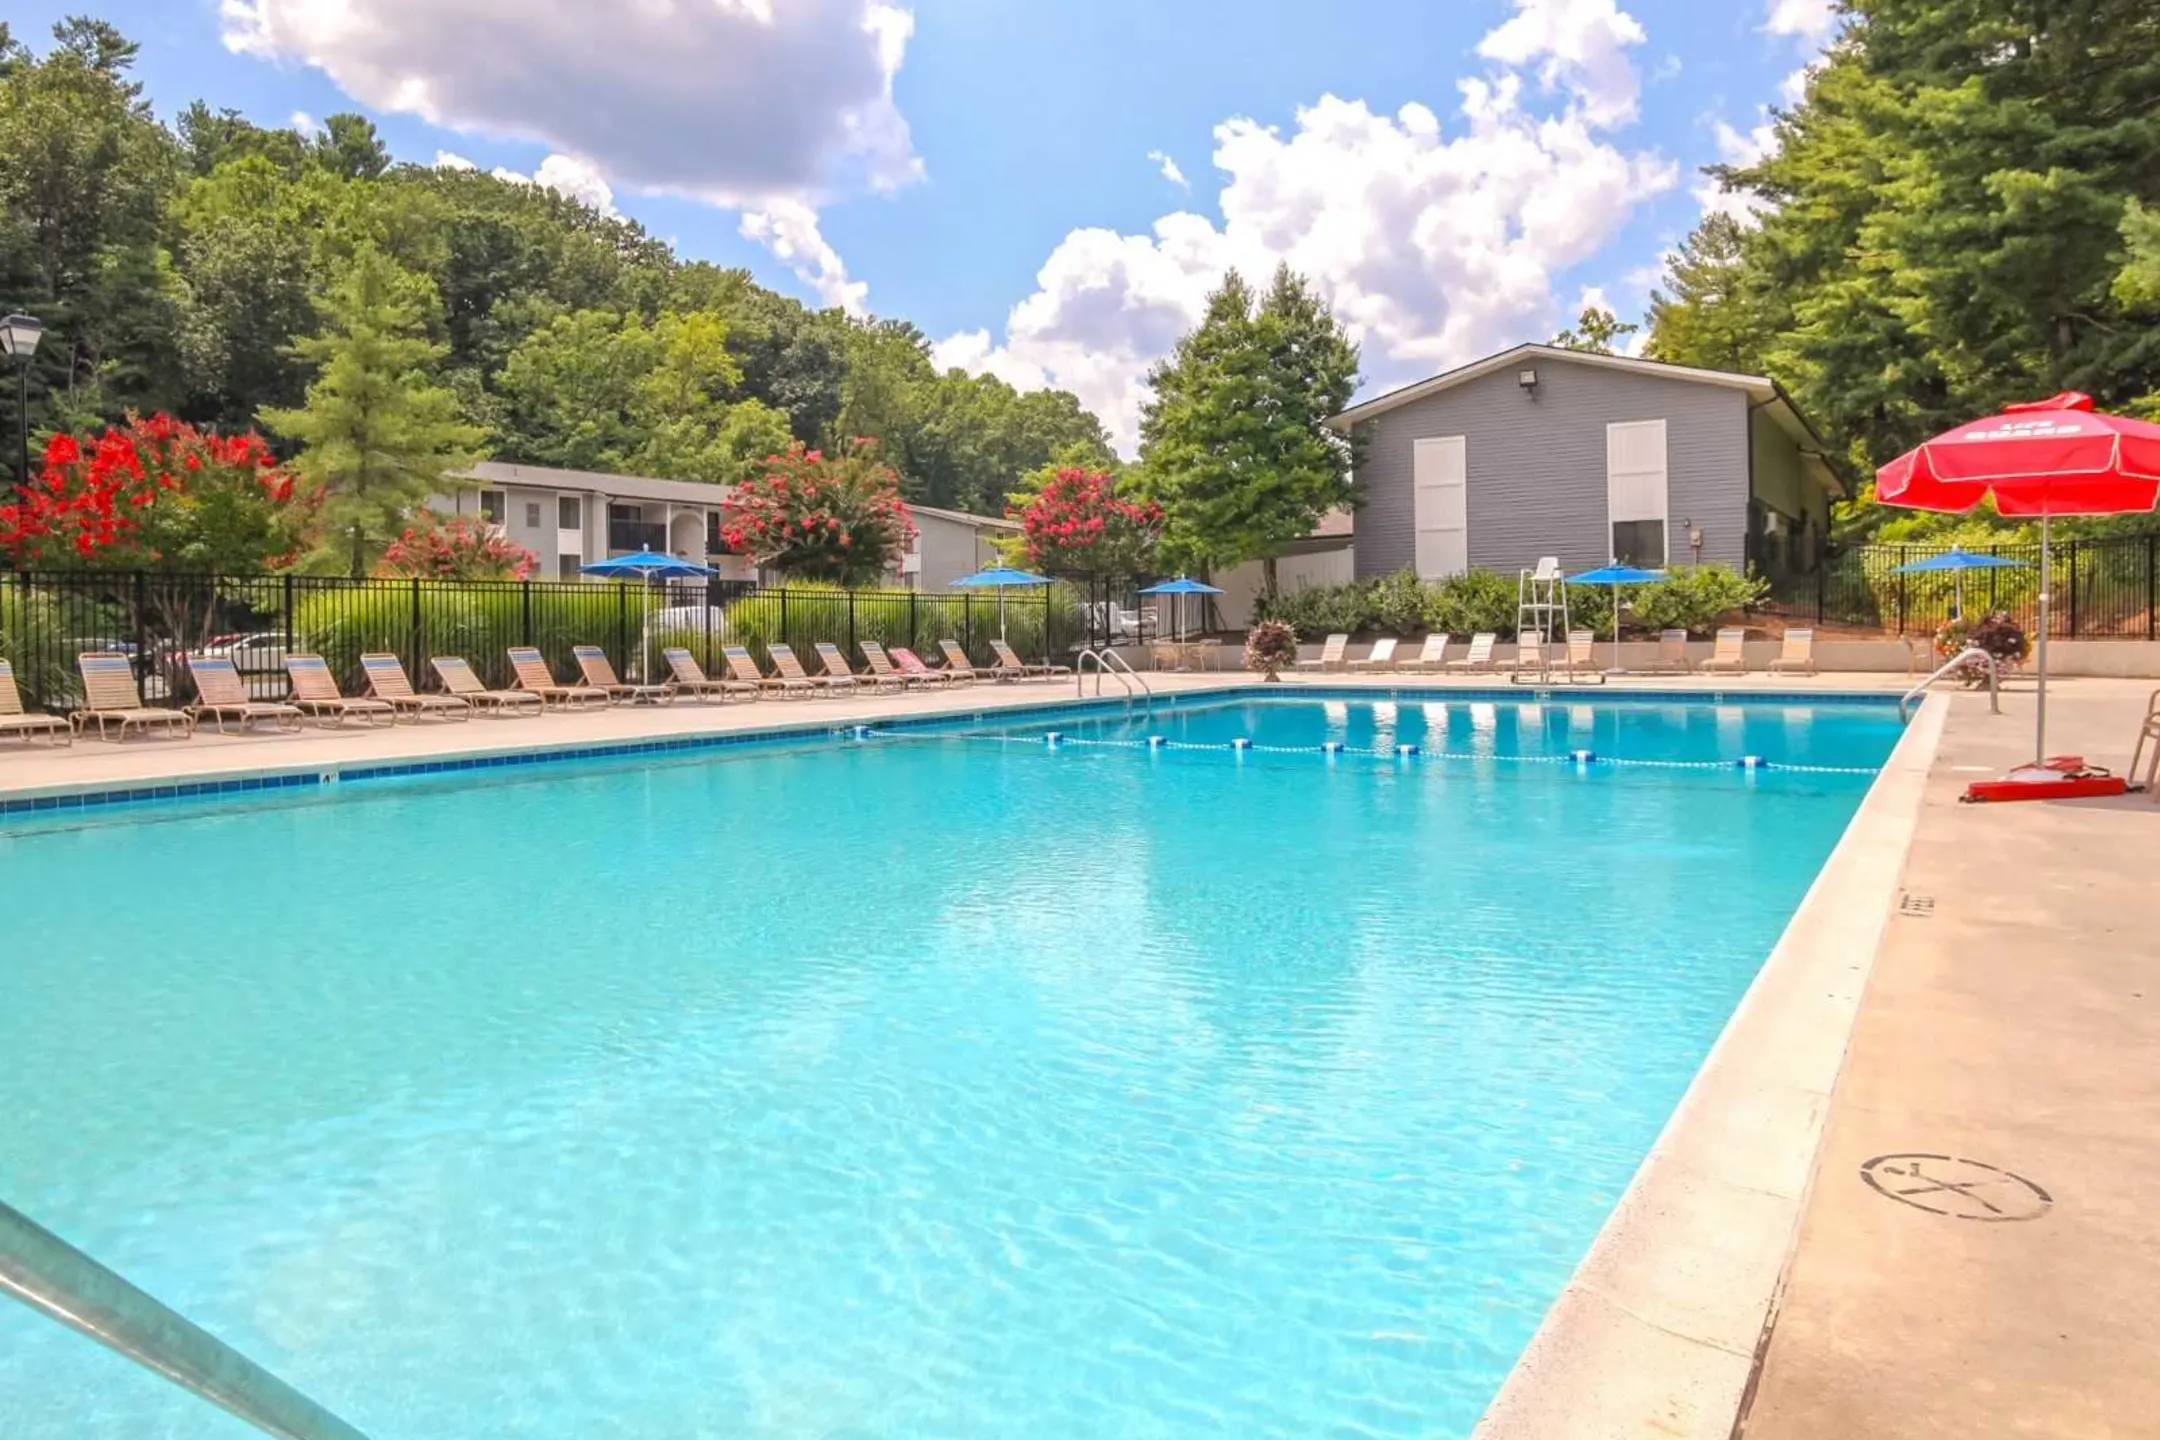 Pool - Pebble Creek Apartment Homes - Roanoke, VA